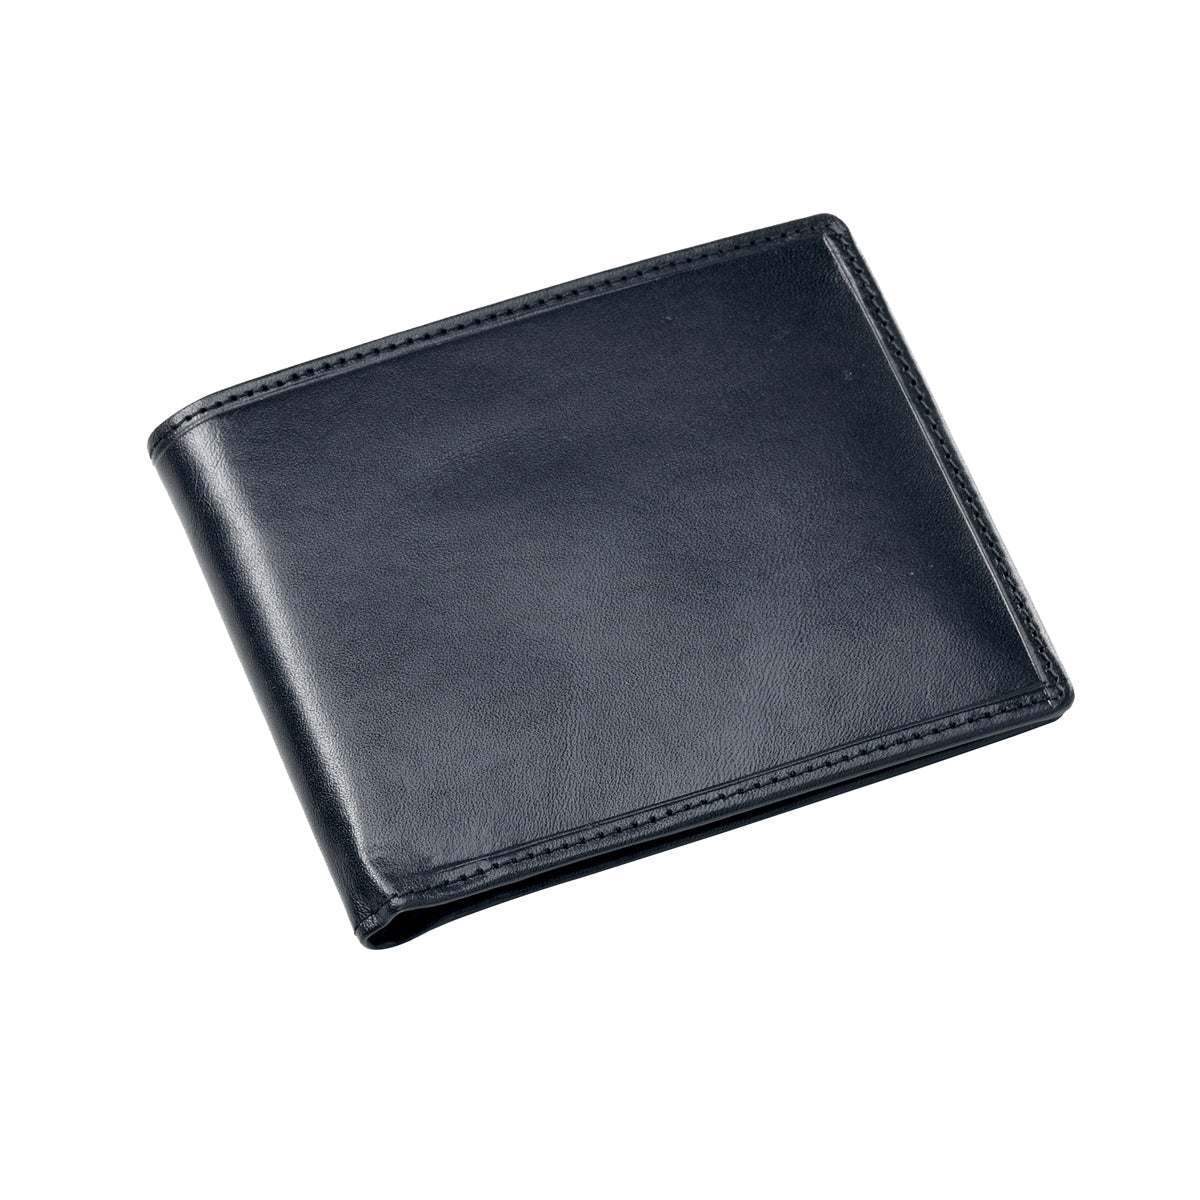 Black Pebble Grain Leather Wallet, Mens Leather Goods